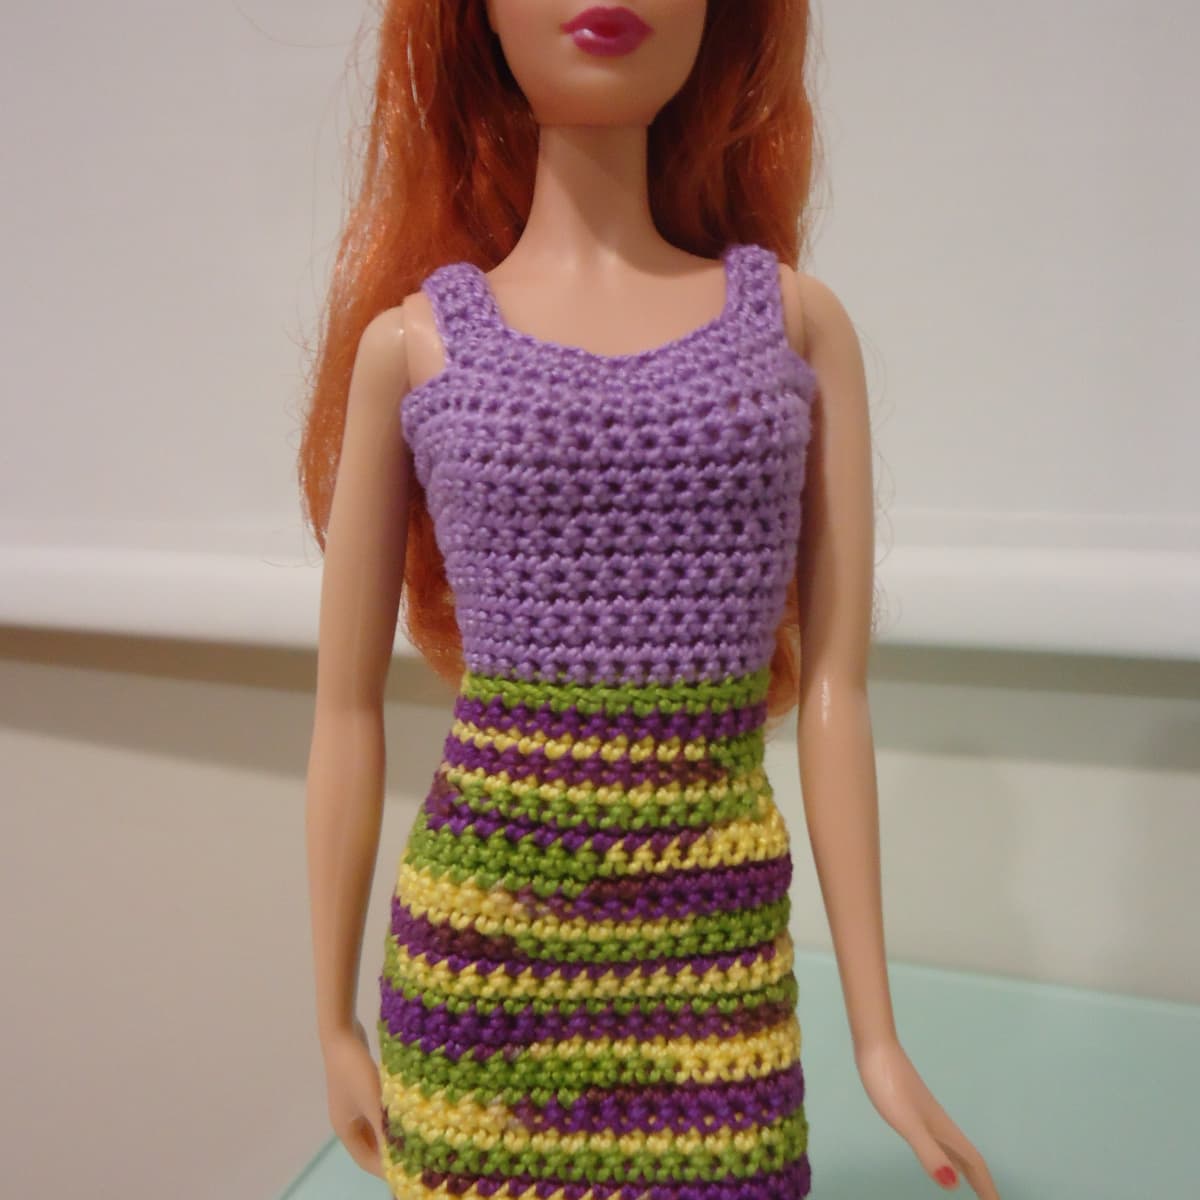 Tapestry Print Dress Fits 11 1/2 Inch Fashion Dolls Like Barbie